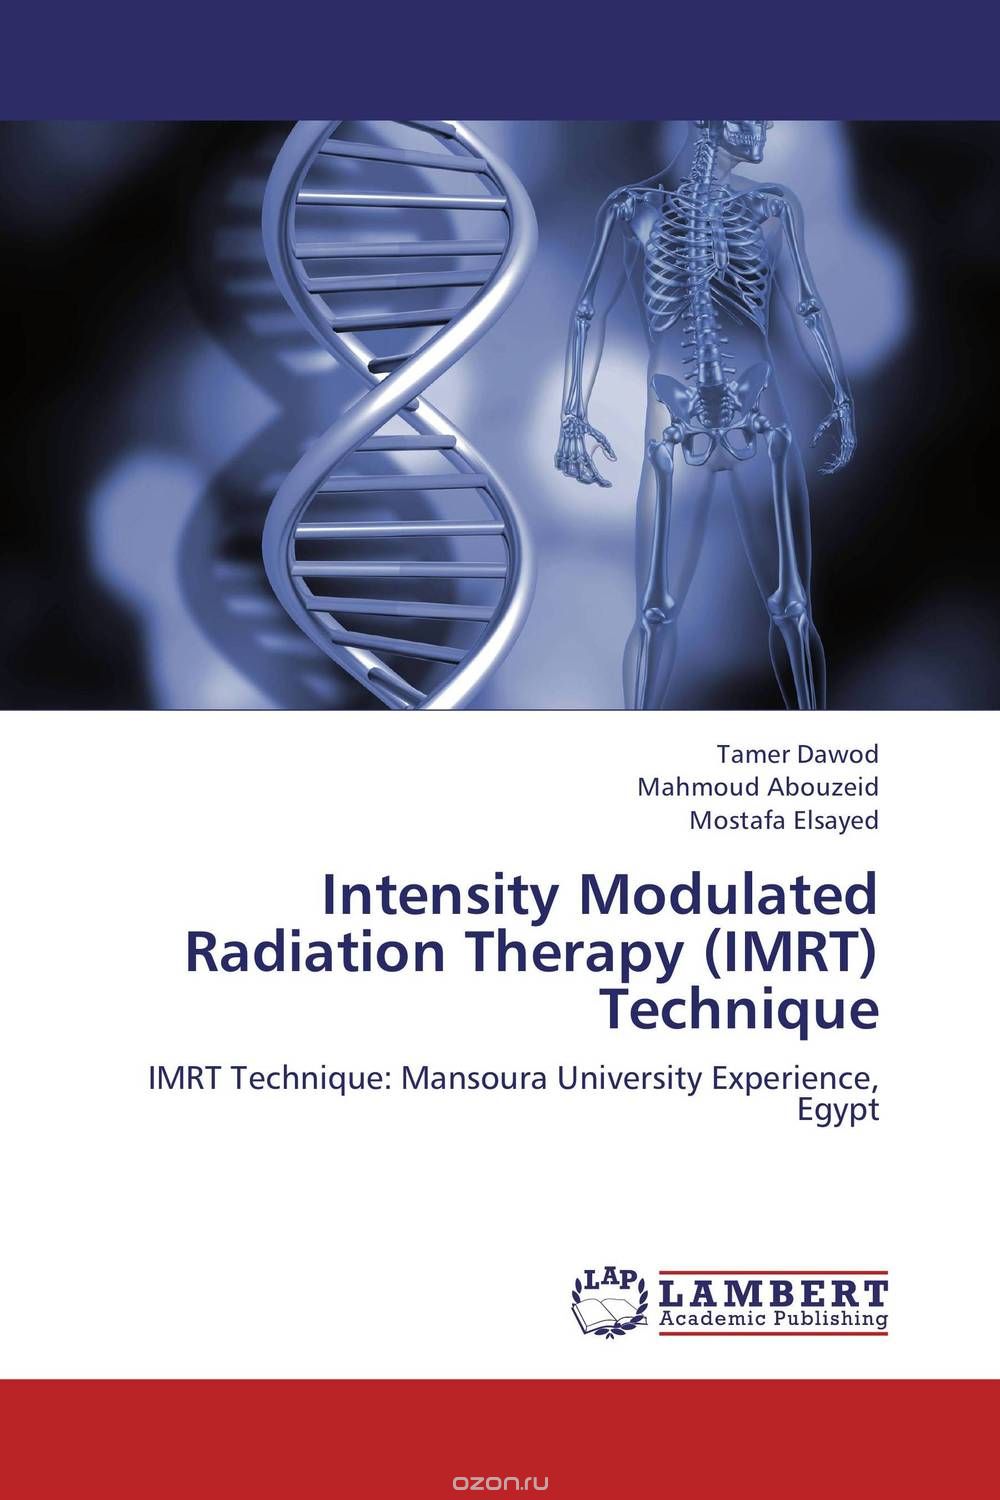 Скачать книгу "Intensity Modulated Radiation Therapy (IMRT) Technique"